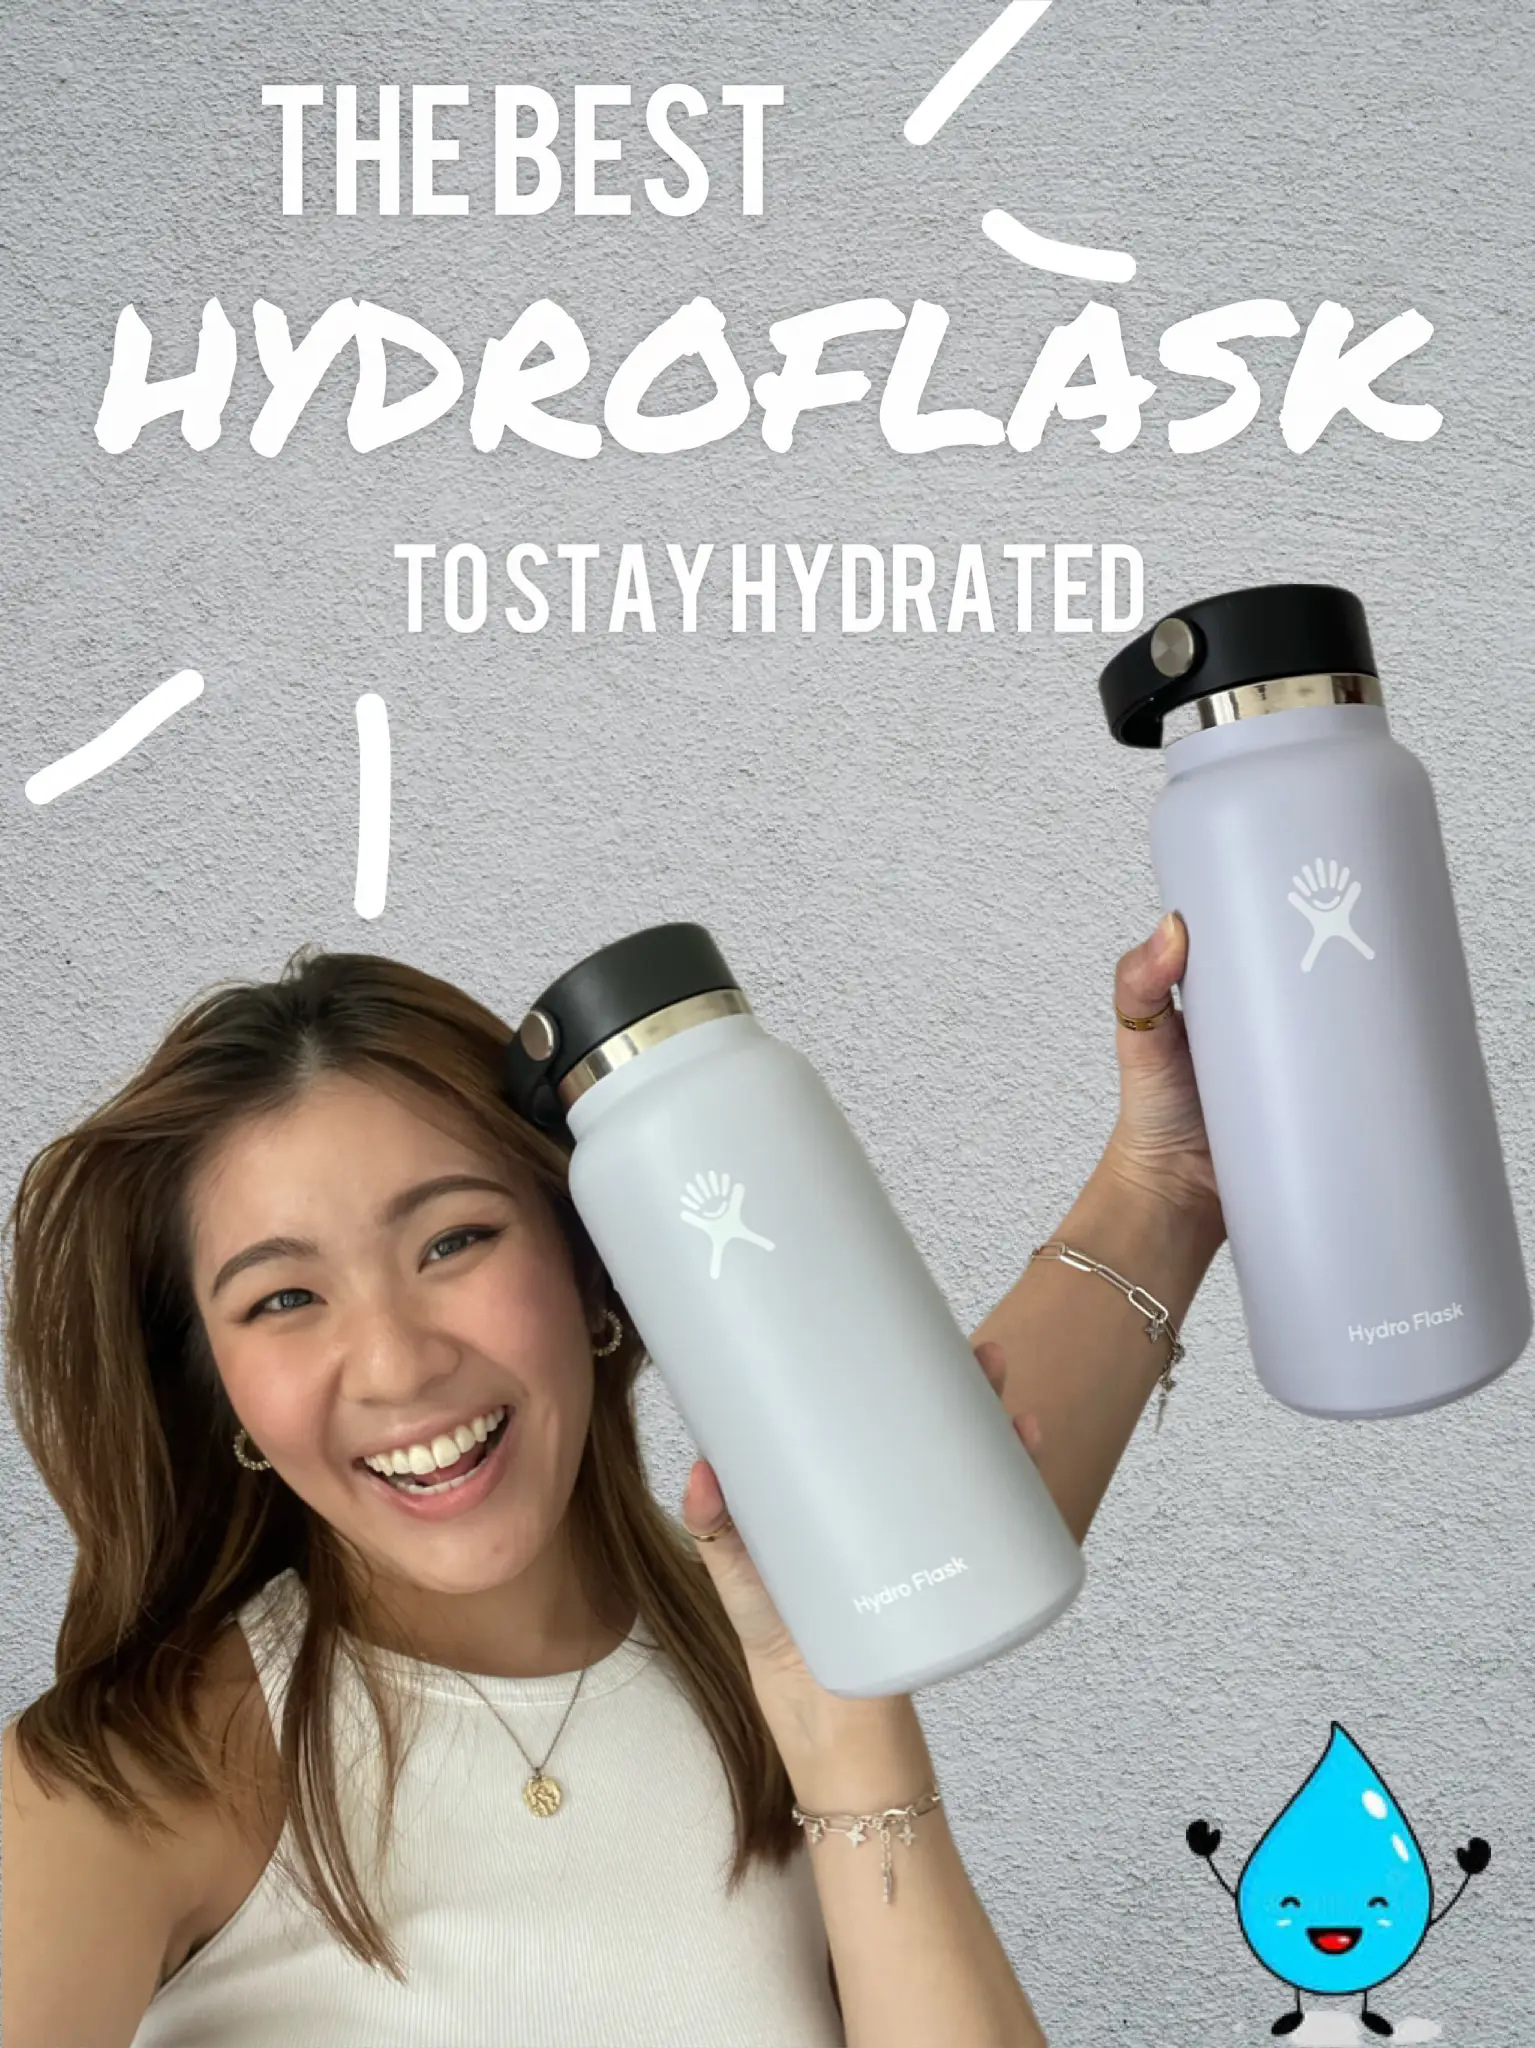 Hydro Flask UK - Buy Hydro Flasks, Bottles & Accessories